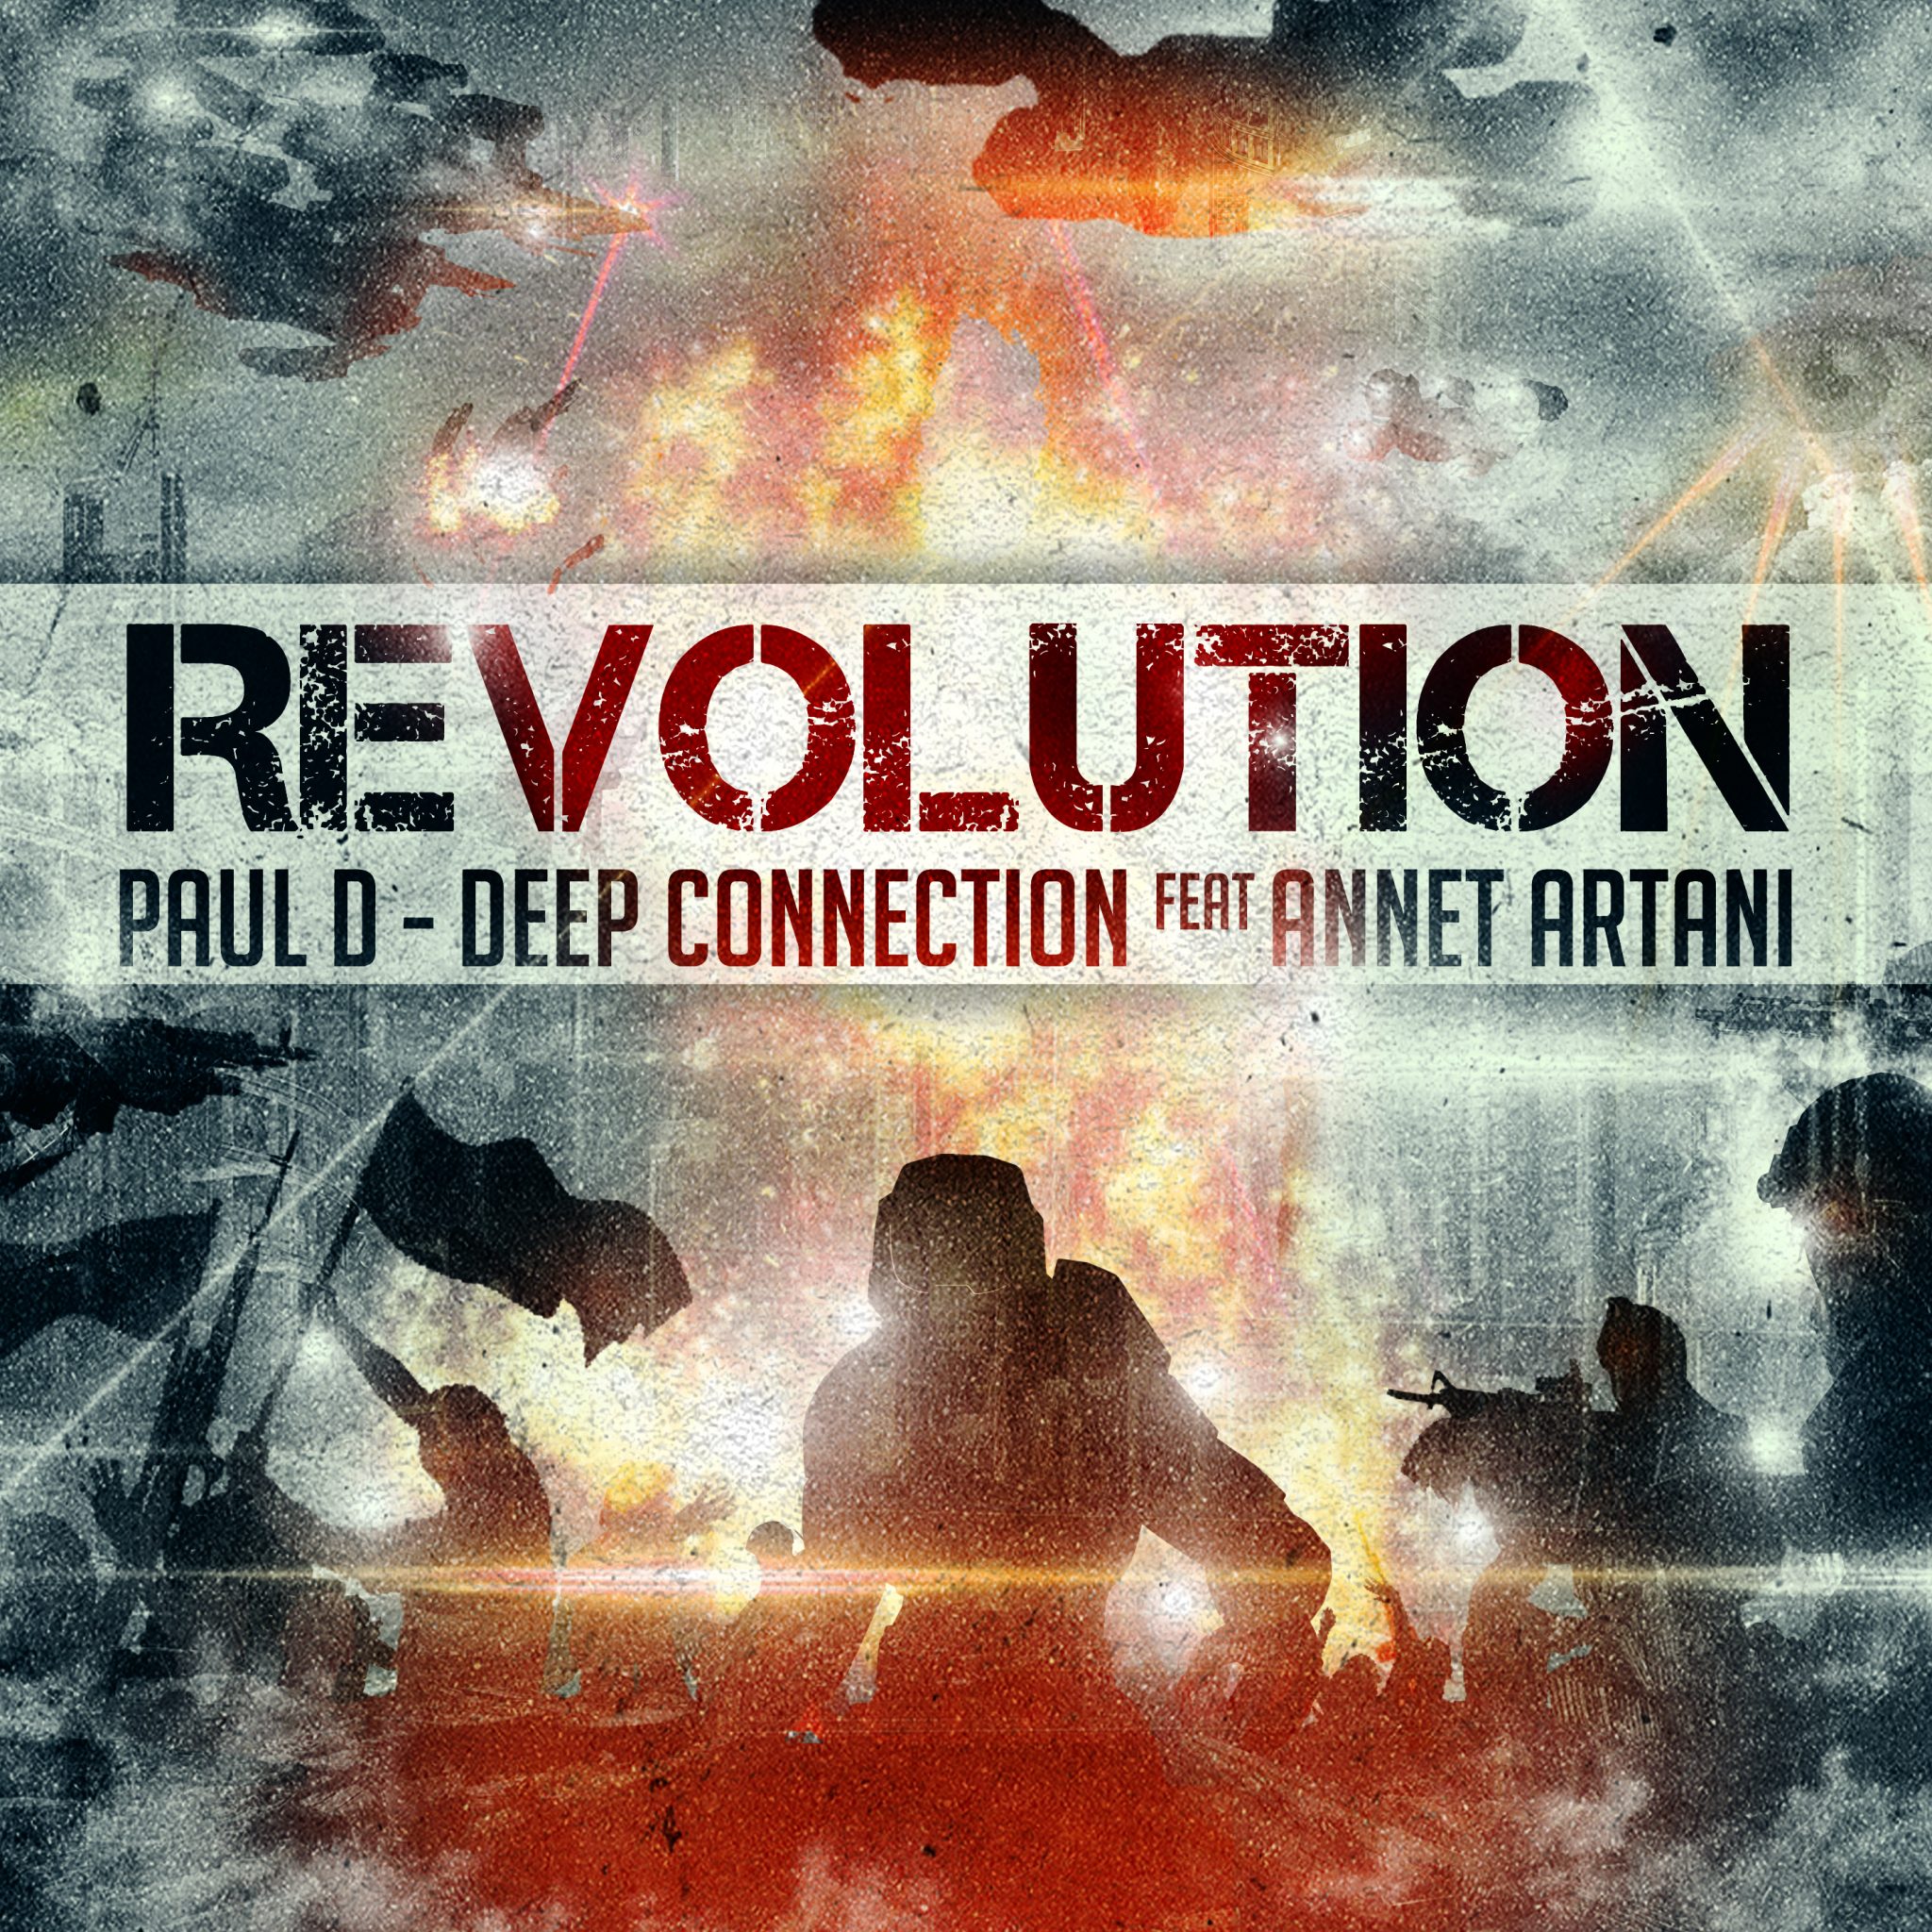 Revolution by Annet Artani & Paul D